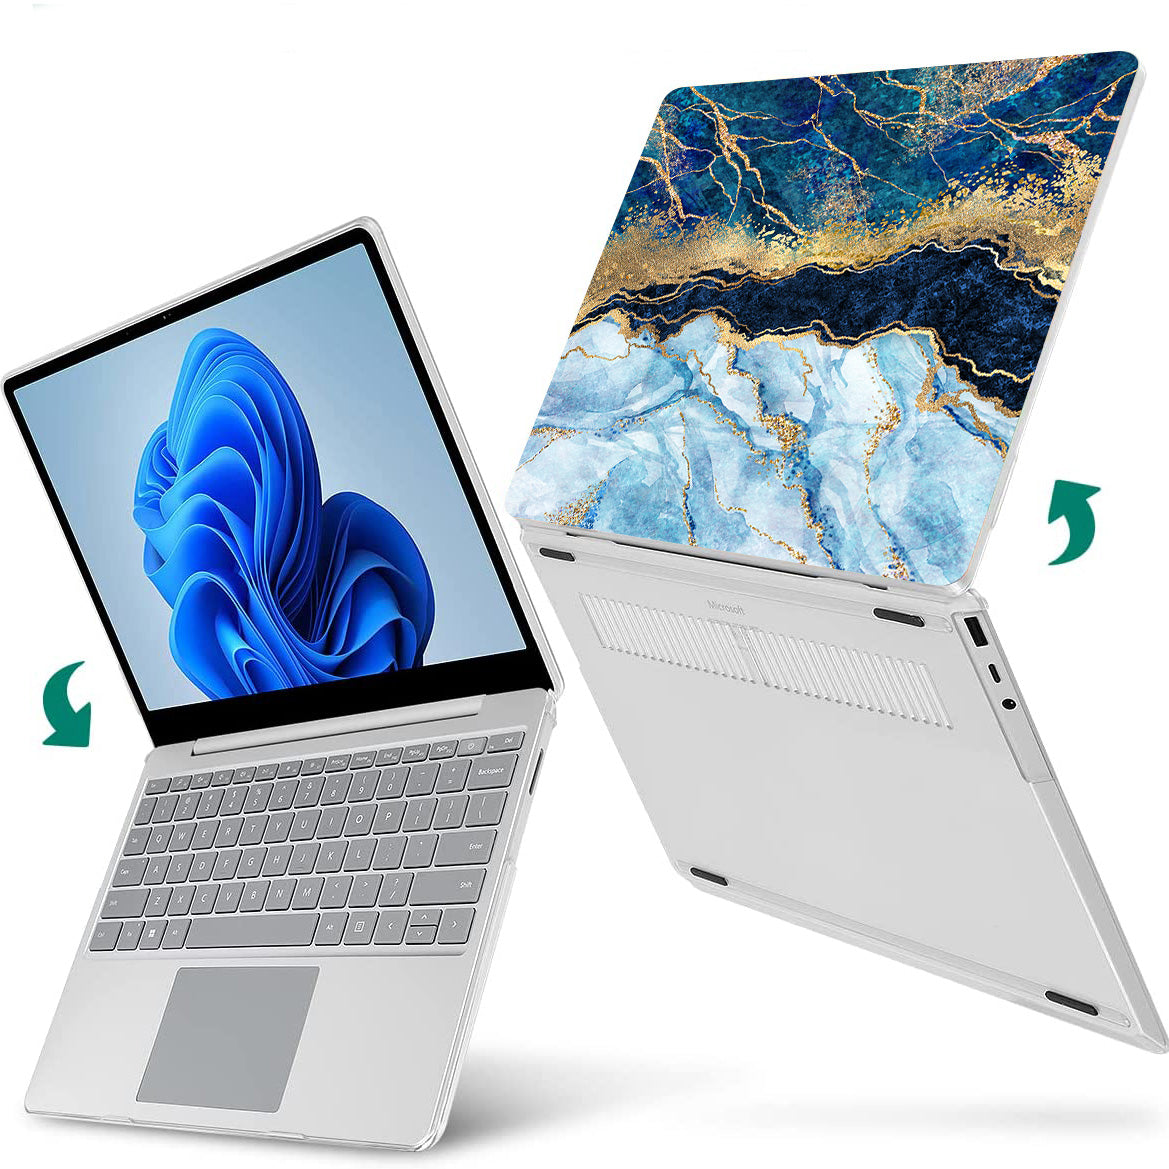 Mysterious Blue River Microsoft Surface Laptop Case